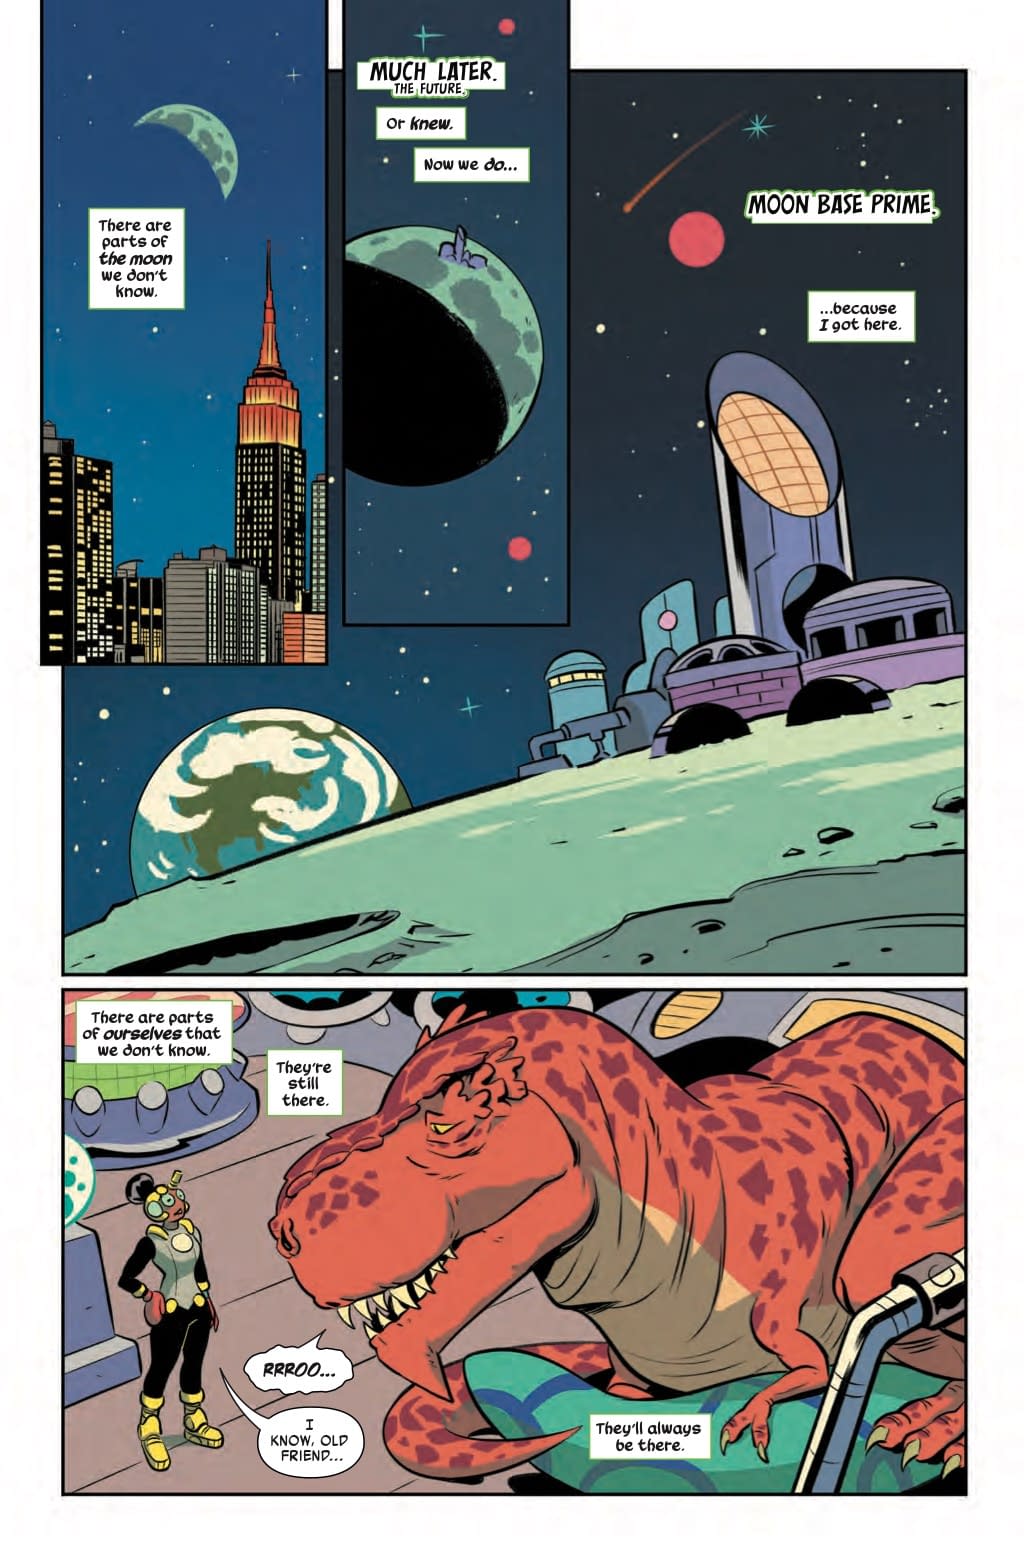 Next Week's Moon Girl &#038; Devil Dinosaur #38 Makes a Case for More Hero vs. Hero Events